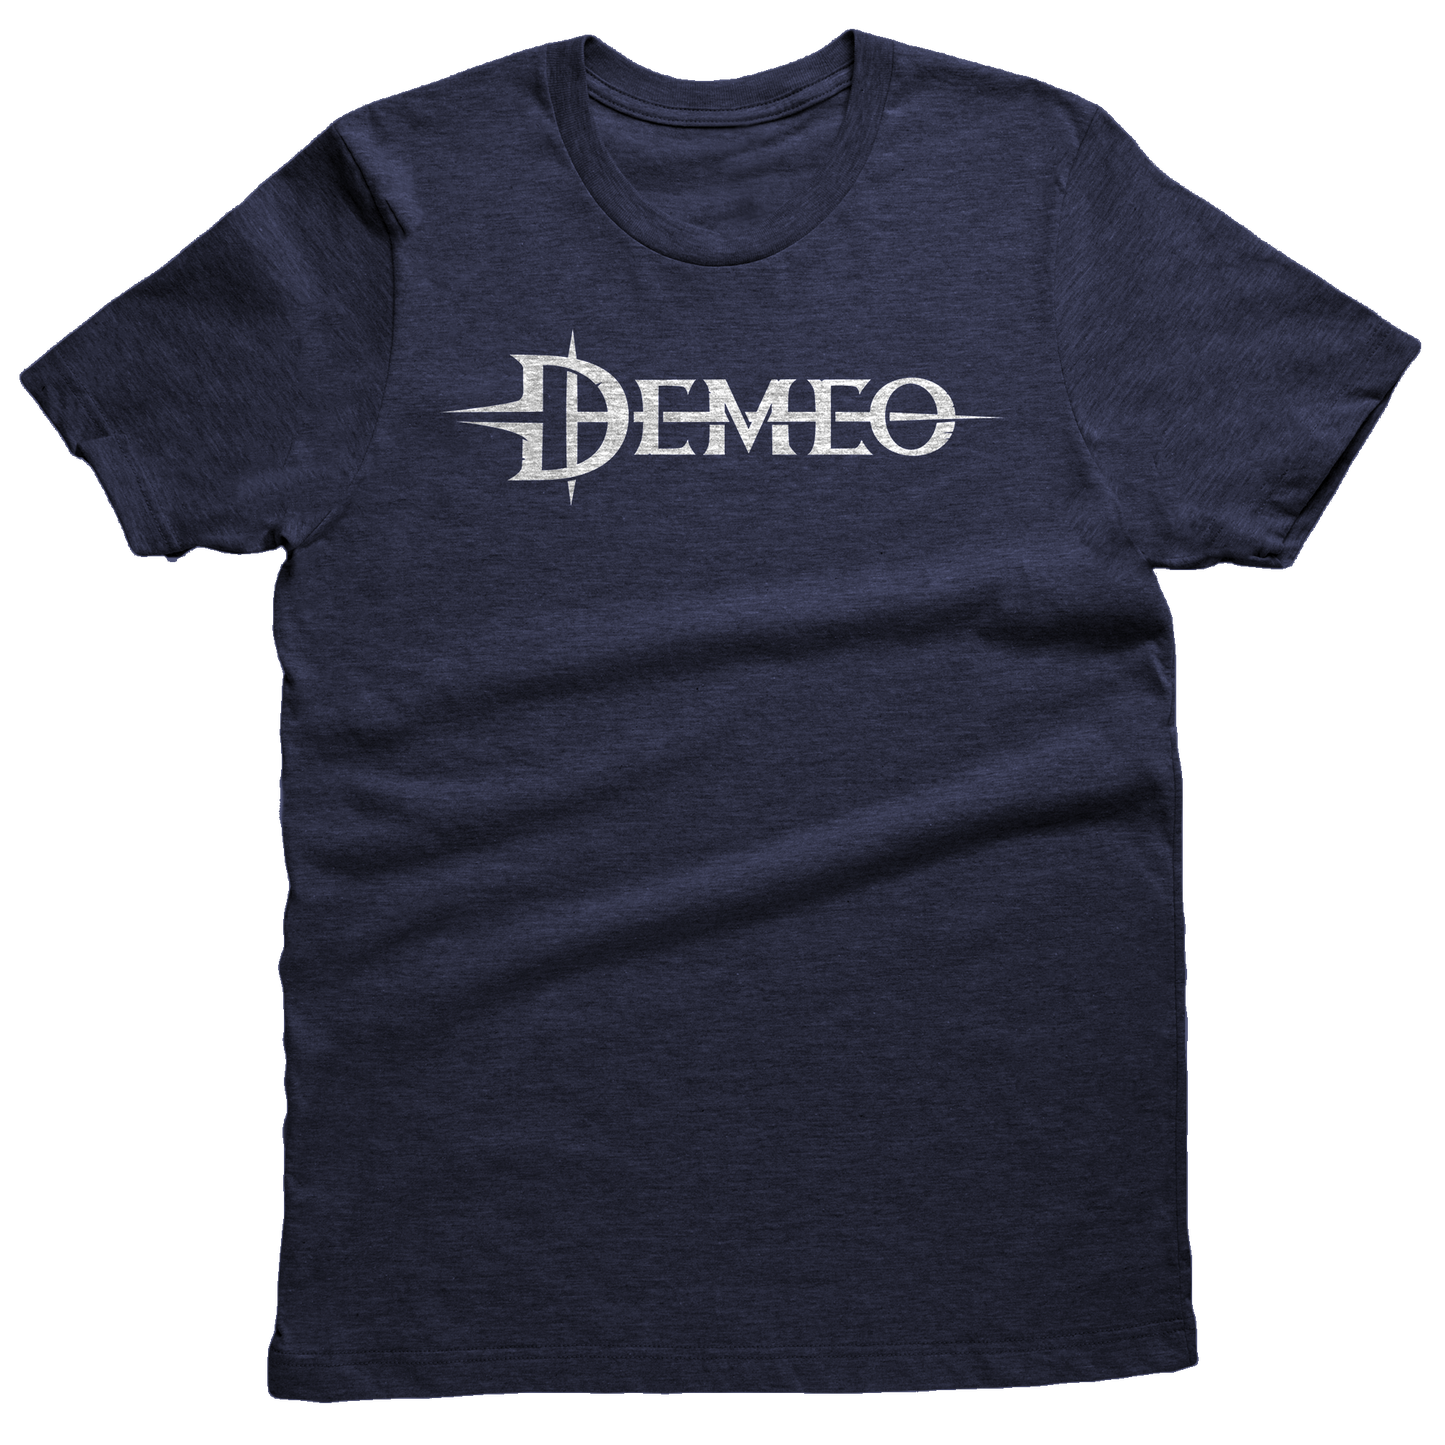 Demeo Logo Tee - White/Navy